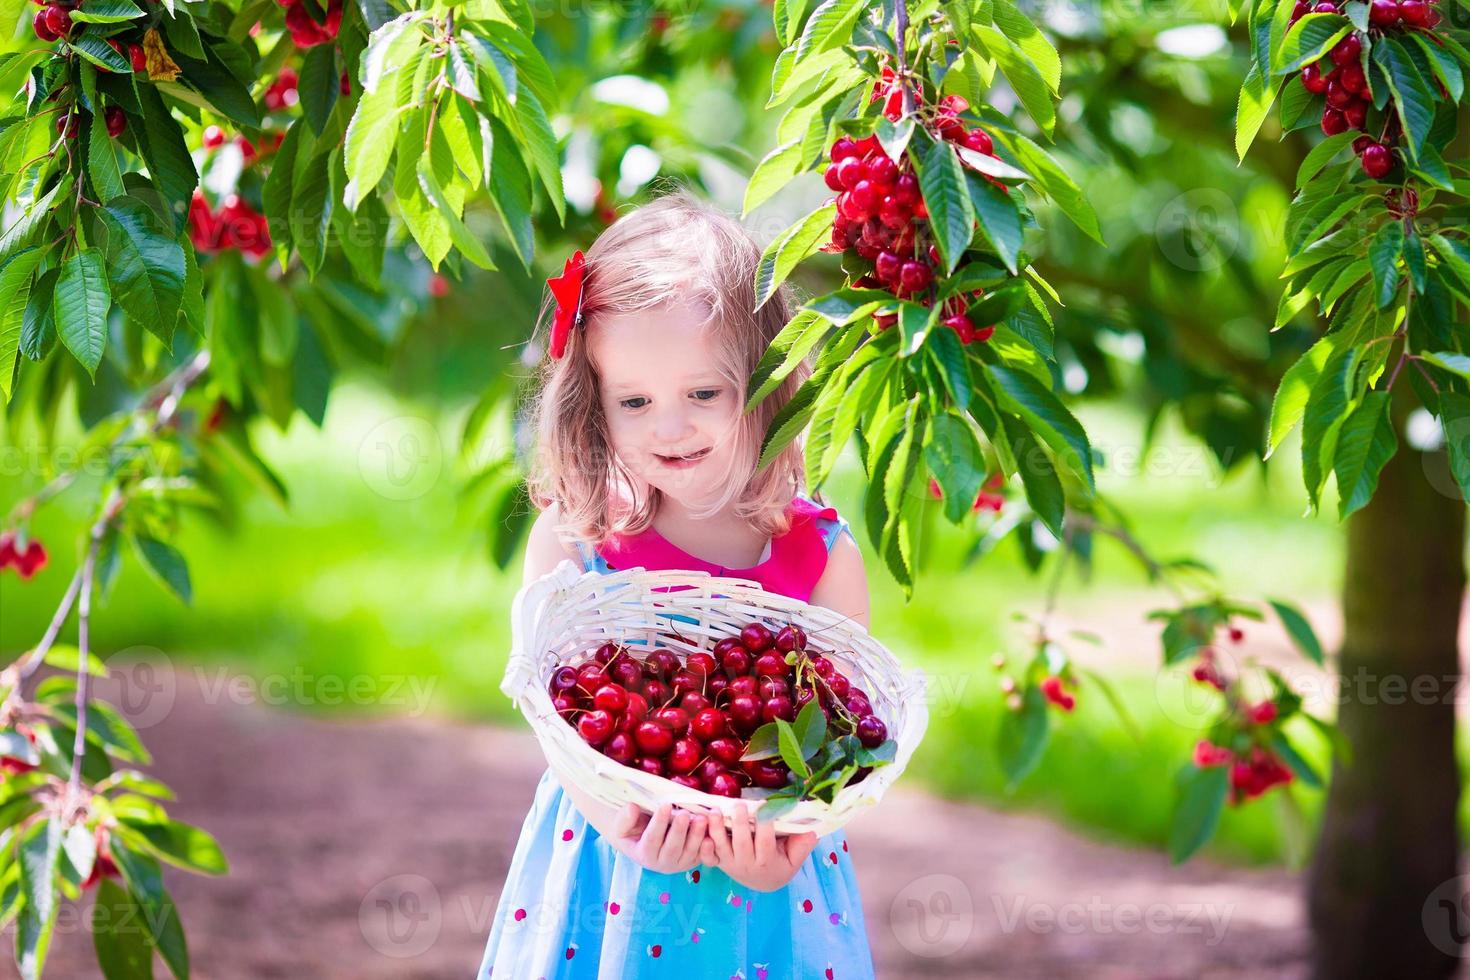 menina colhendo bagas frescas de cereja no jardim foto